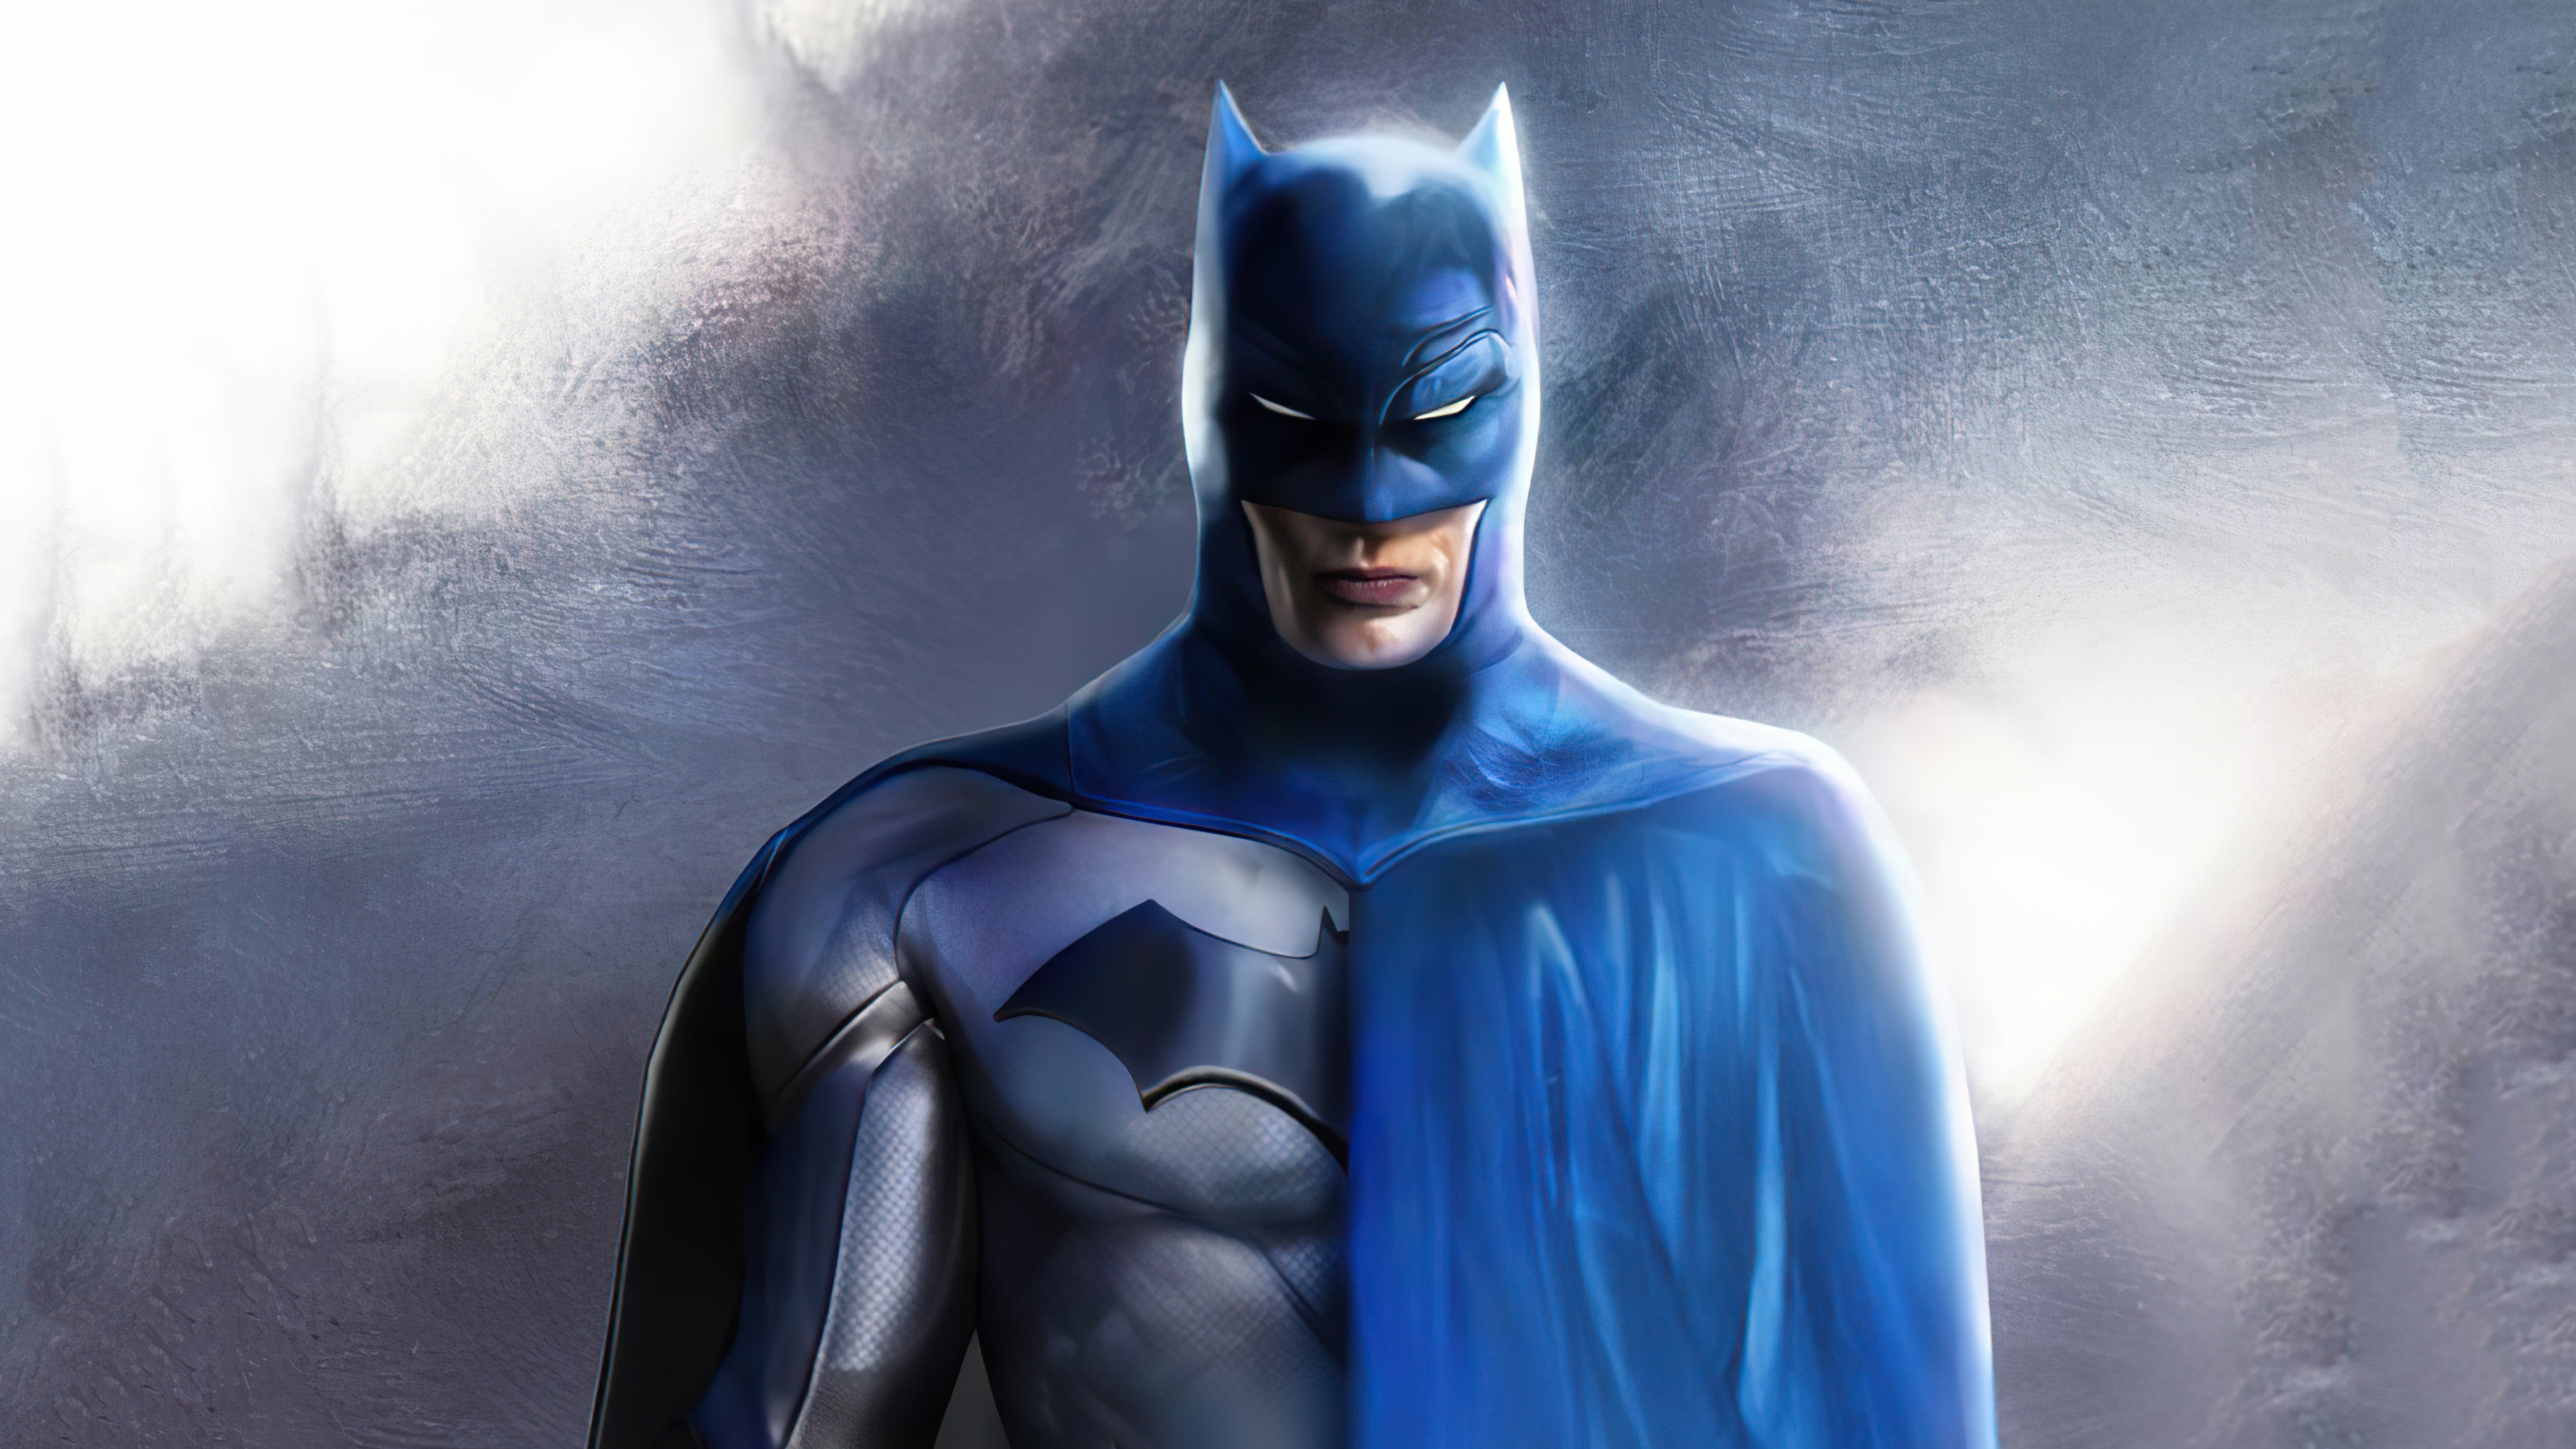 Batman 4k Ultra HD Wallpaper Background Image 3840x2160 3840x2160